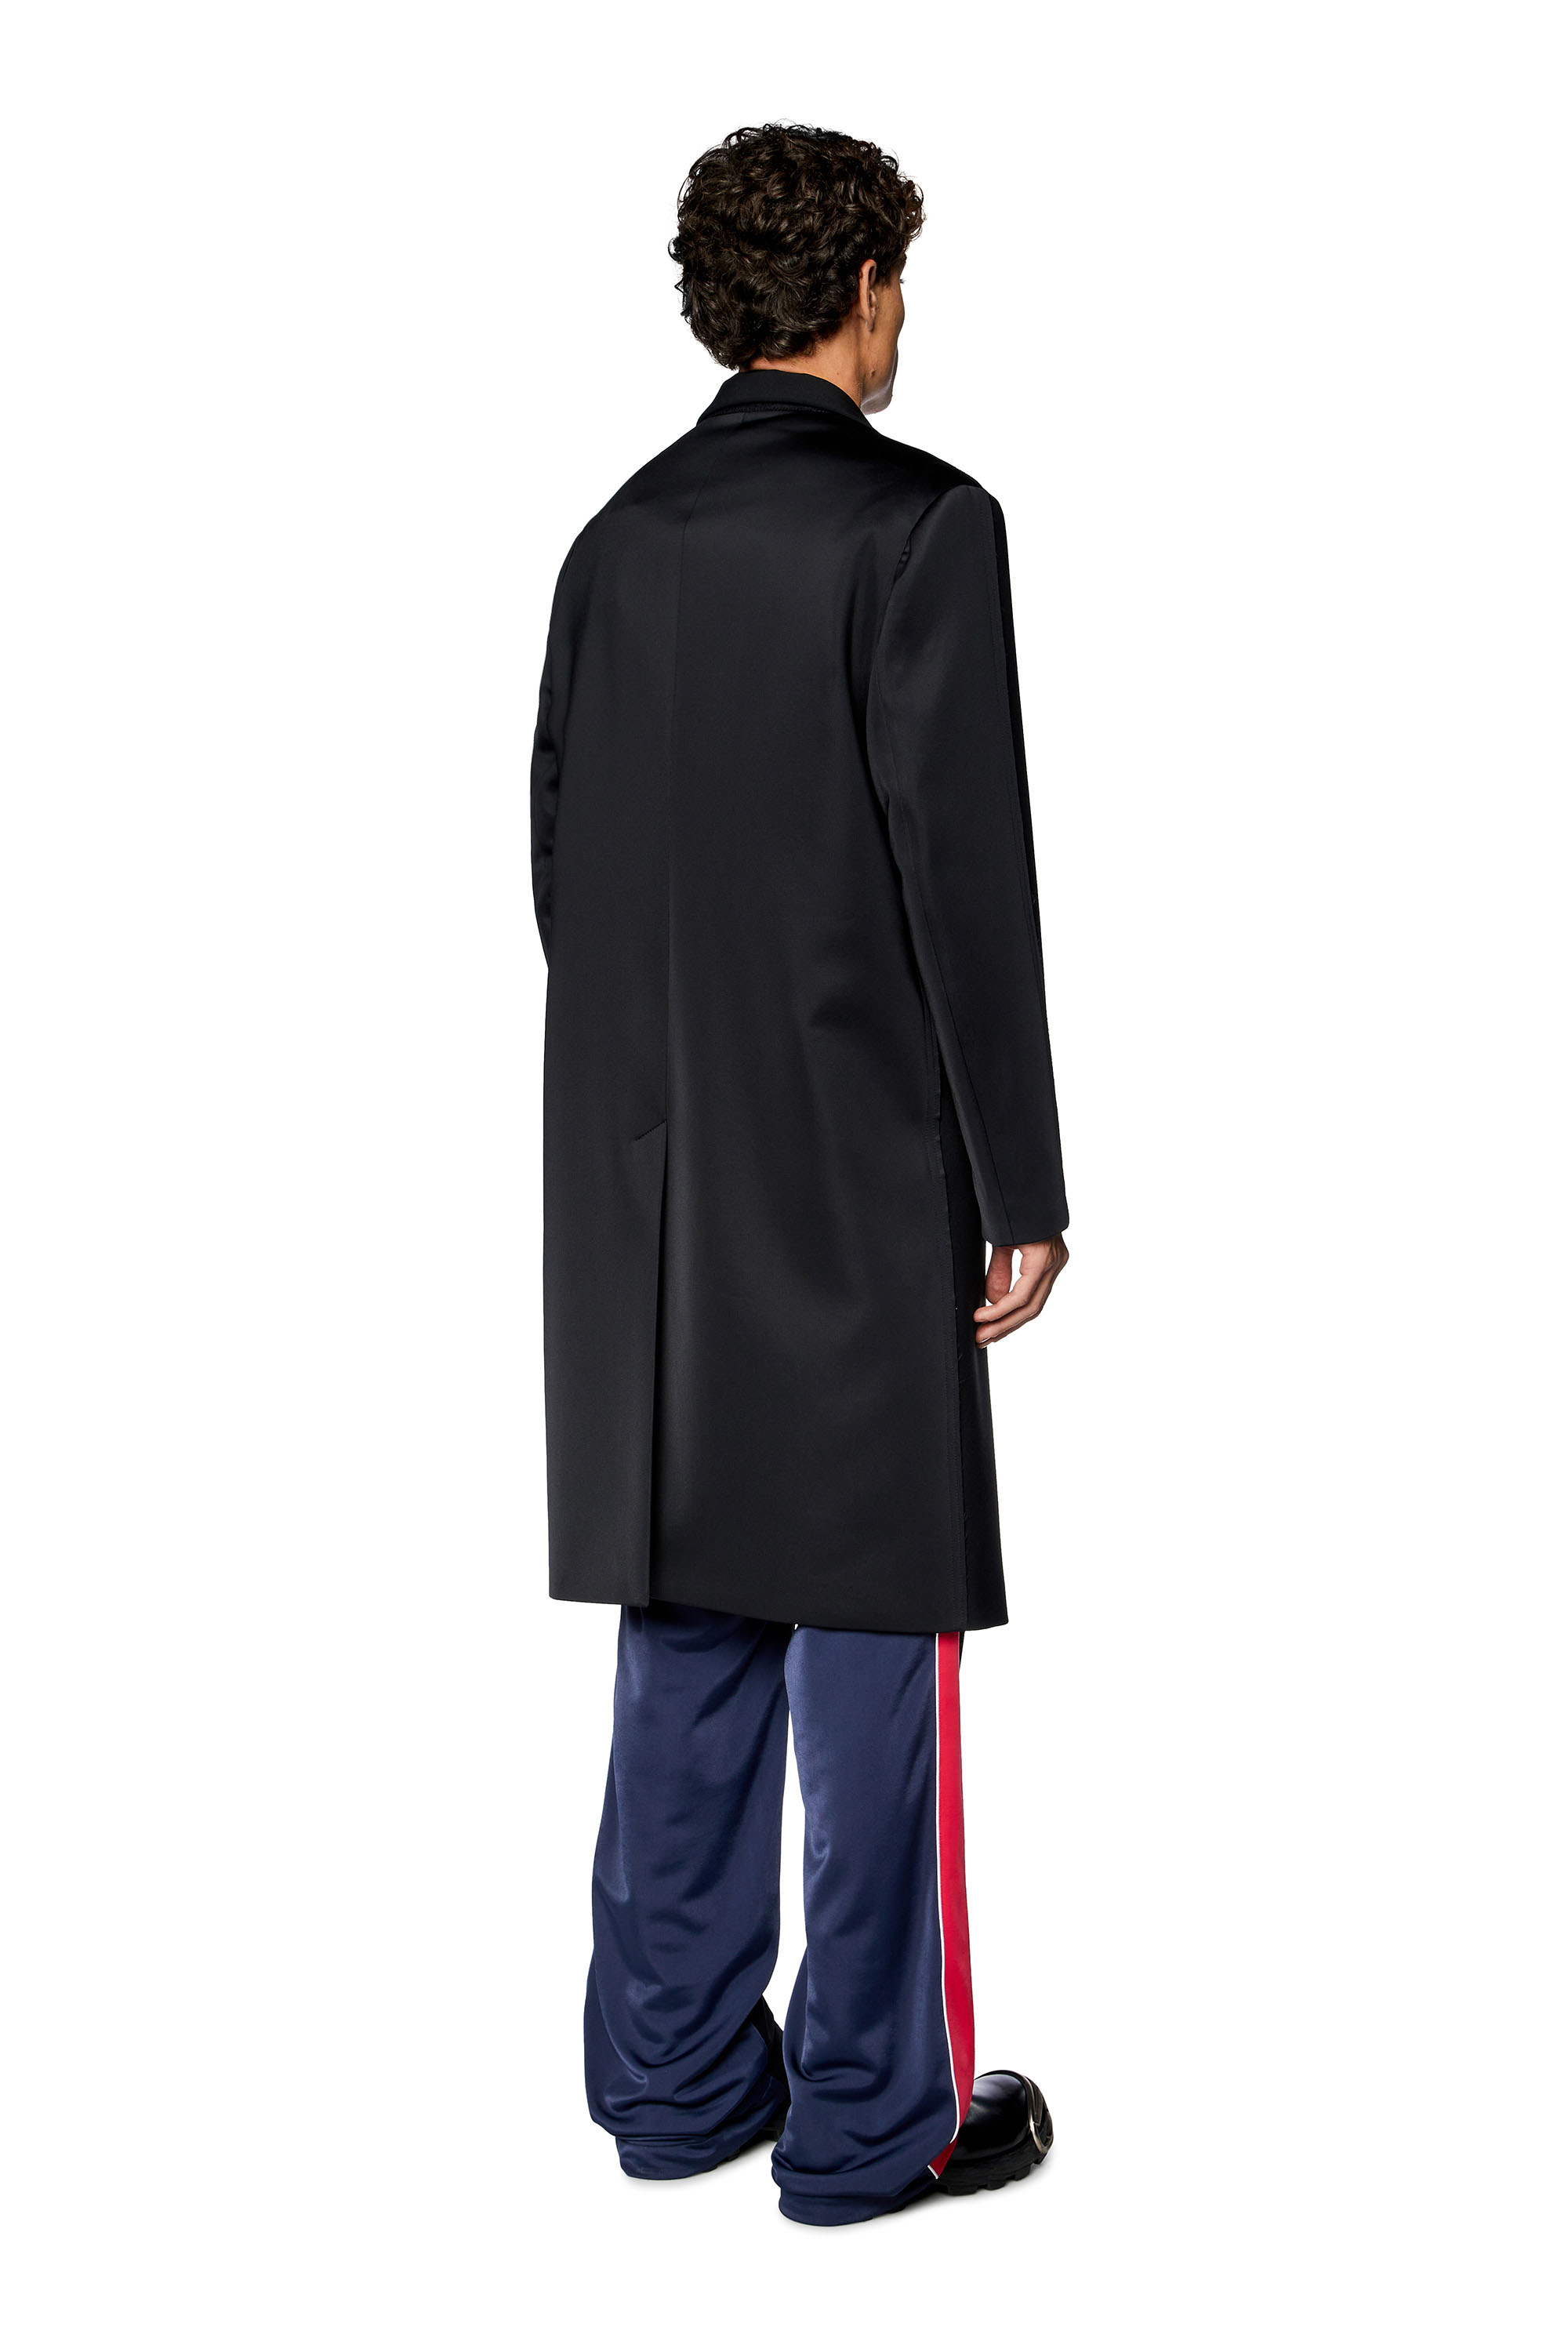 Diesel - J-DELLER, Man Hybrid coat in cool wool and jersey in Black - Image 4